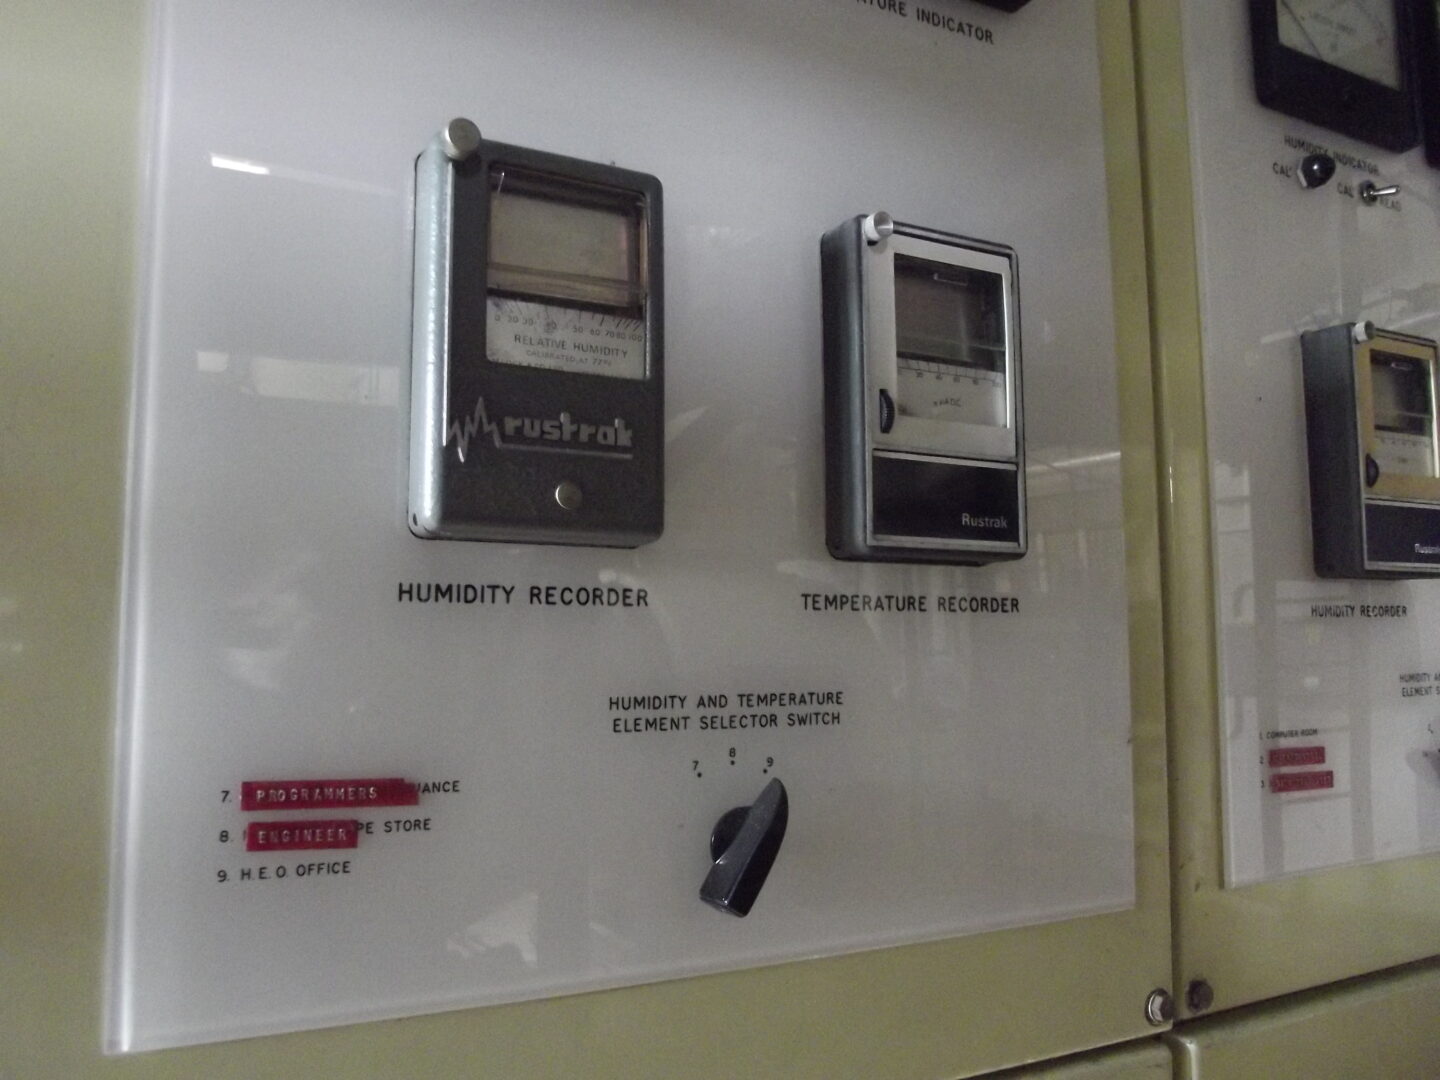 W401 plant room control panel, 24 Sep 2011